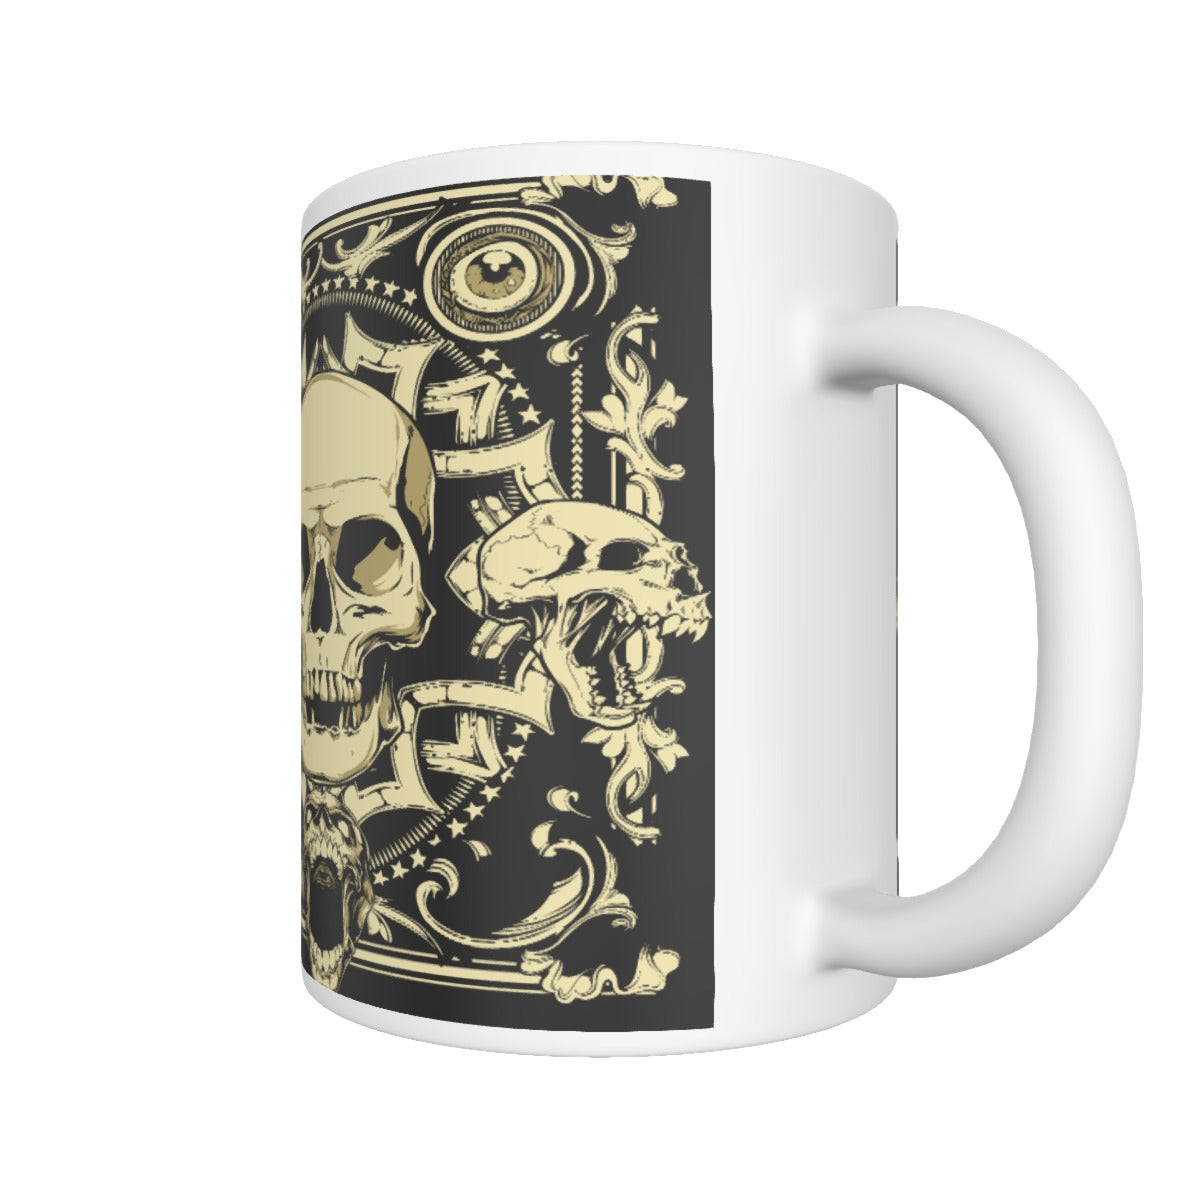 Gothic skull Ceramics mug